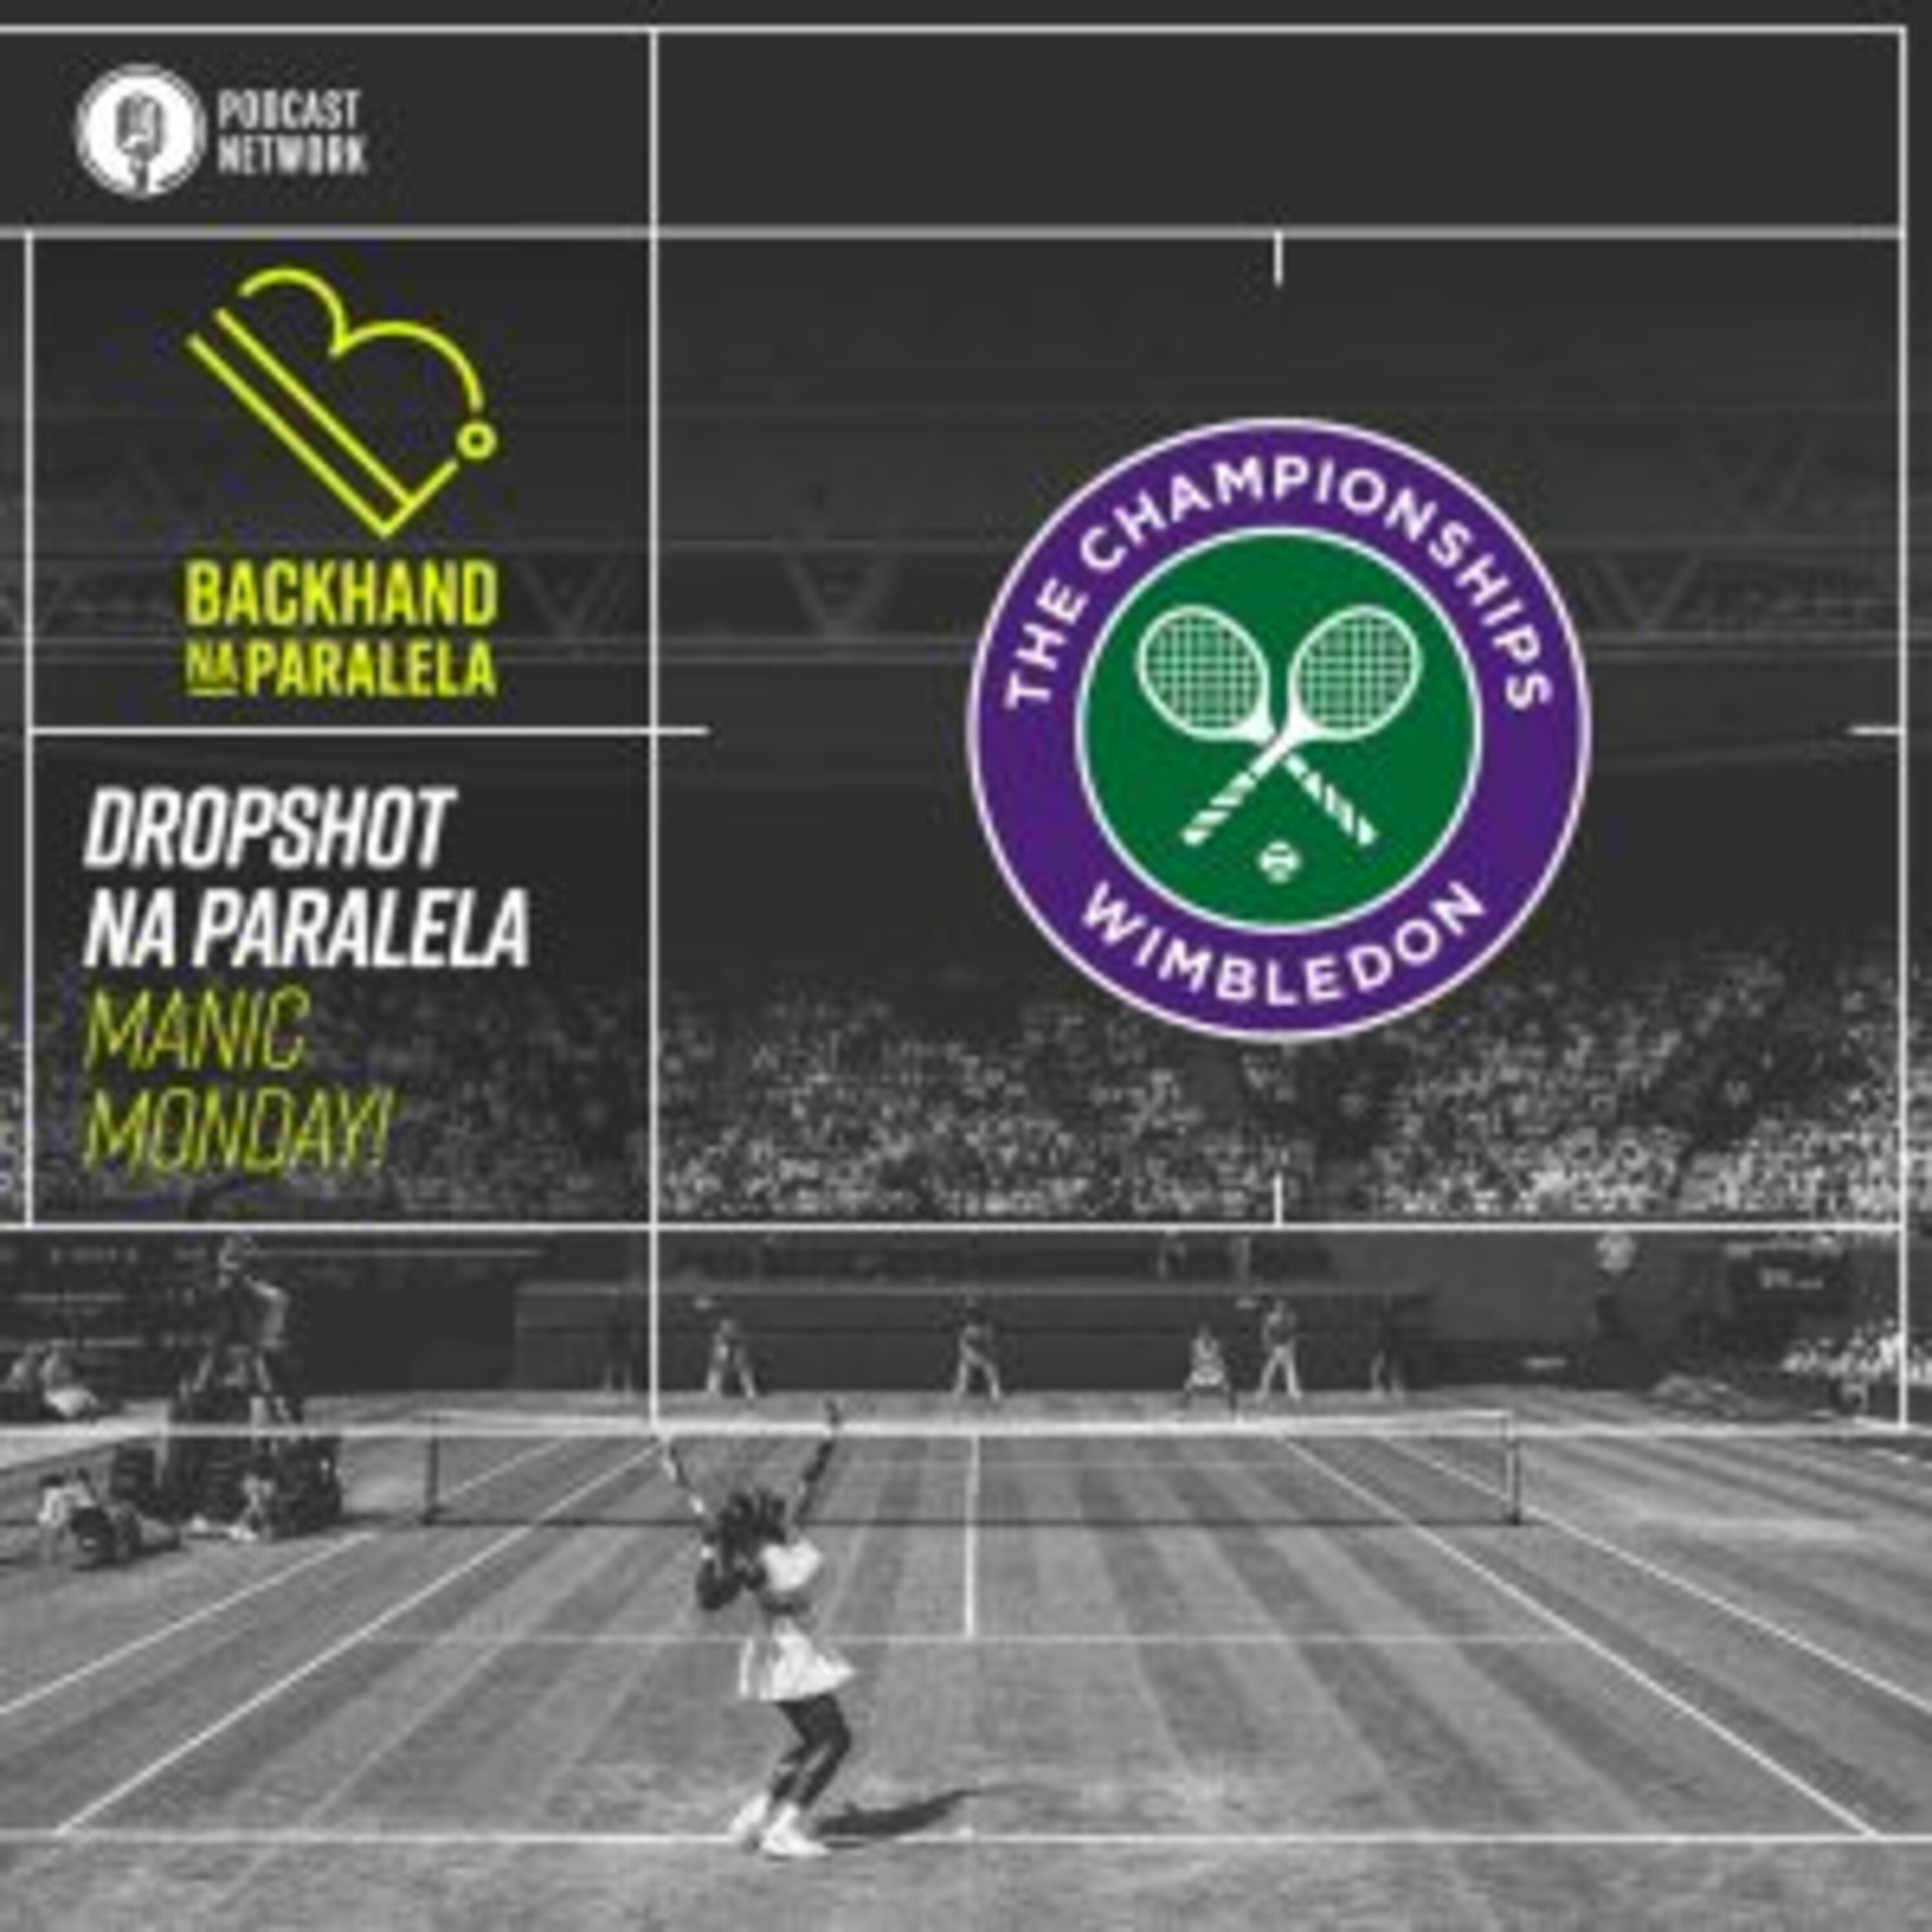 Backhand na Paralela – Dropshot na Paralela Wimbledon – Dia 08 – Manic Monday